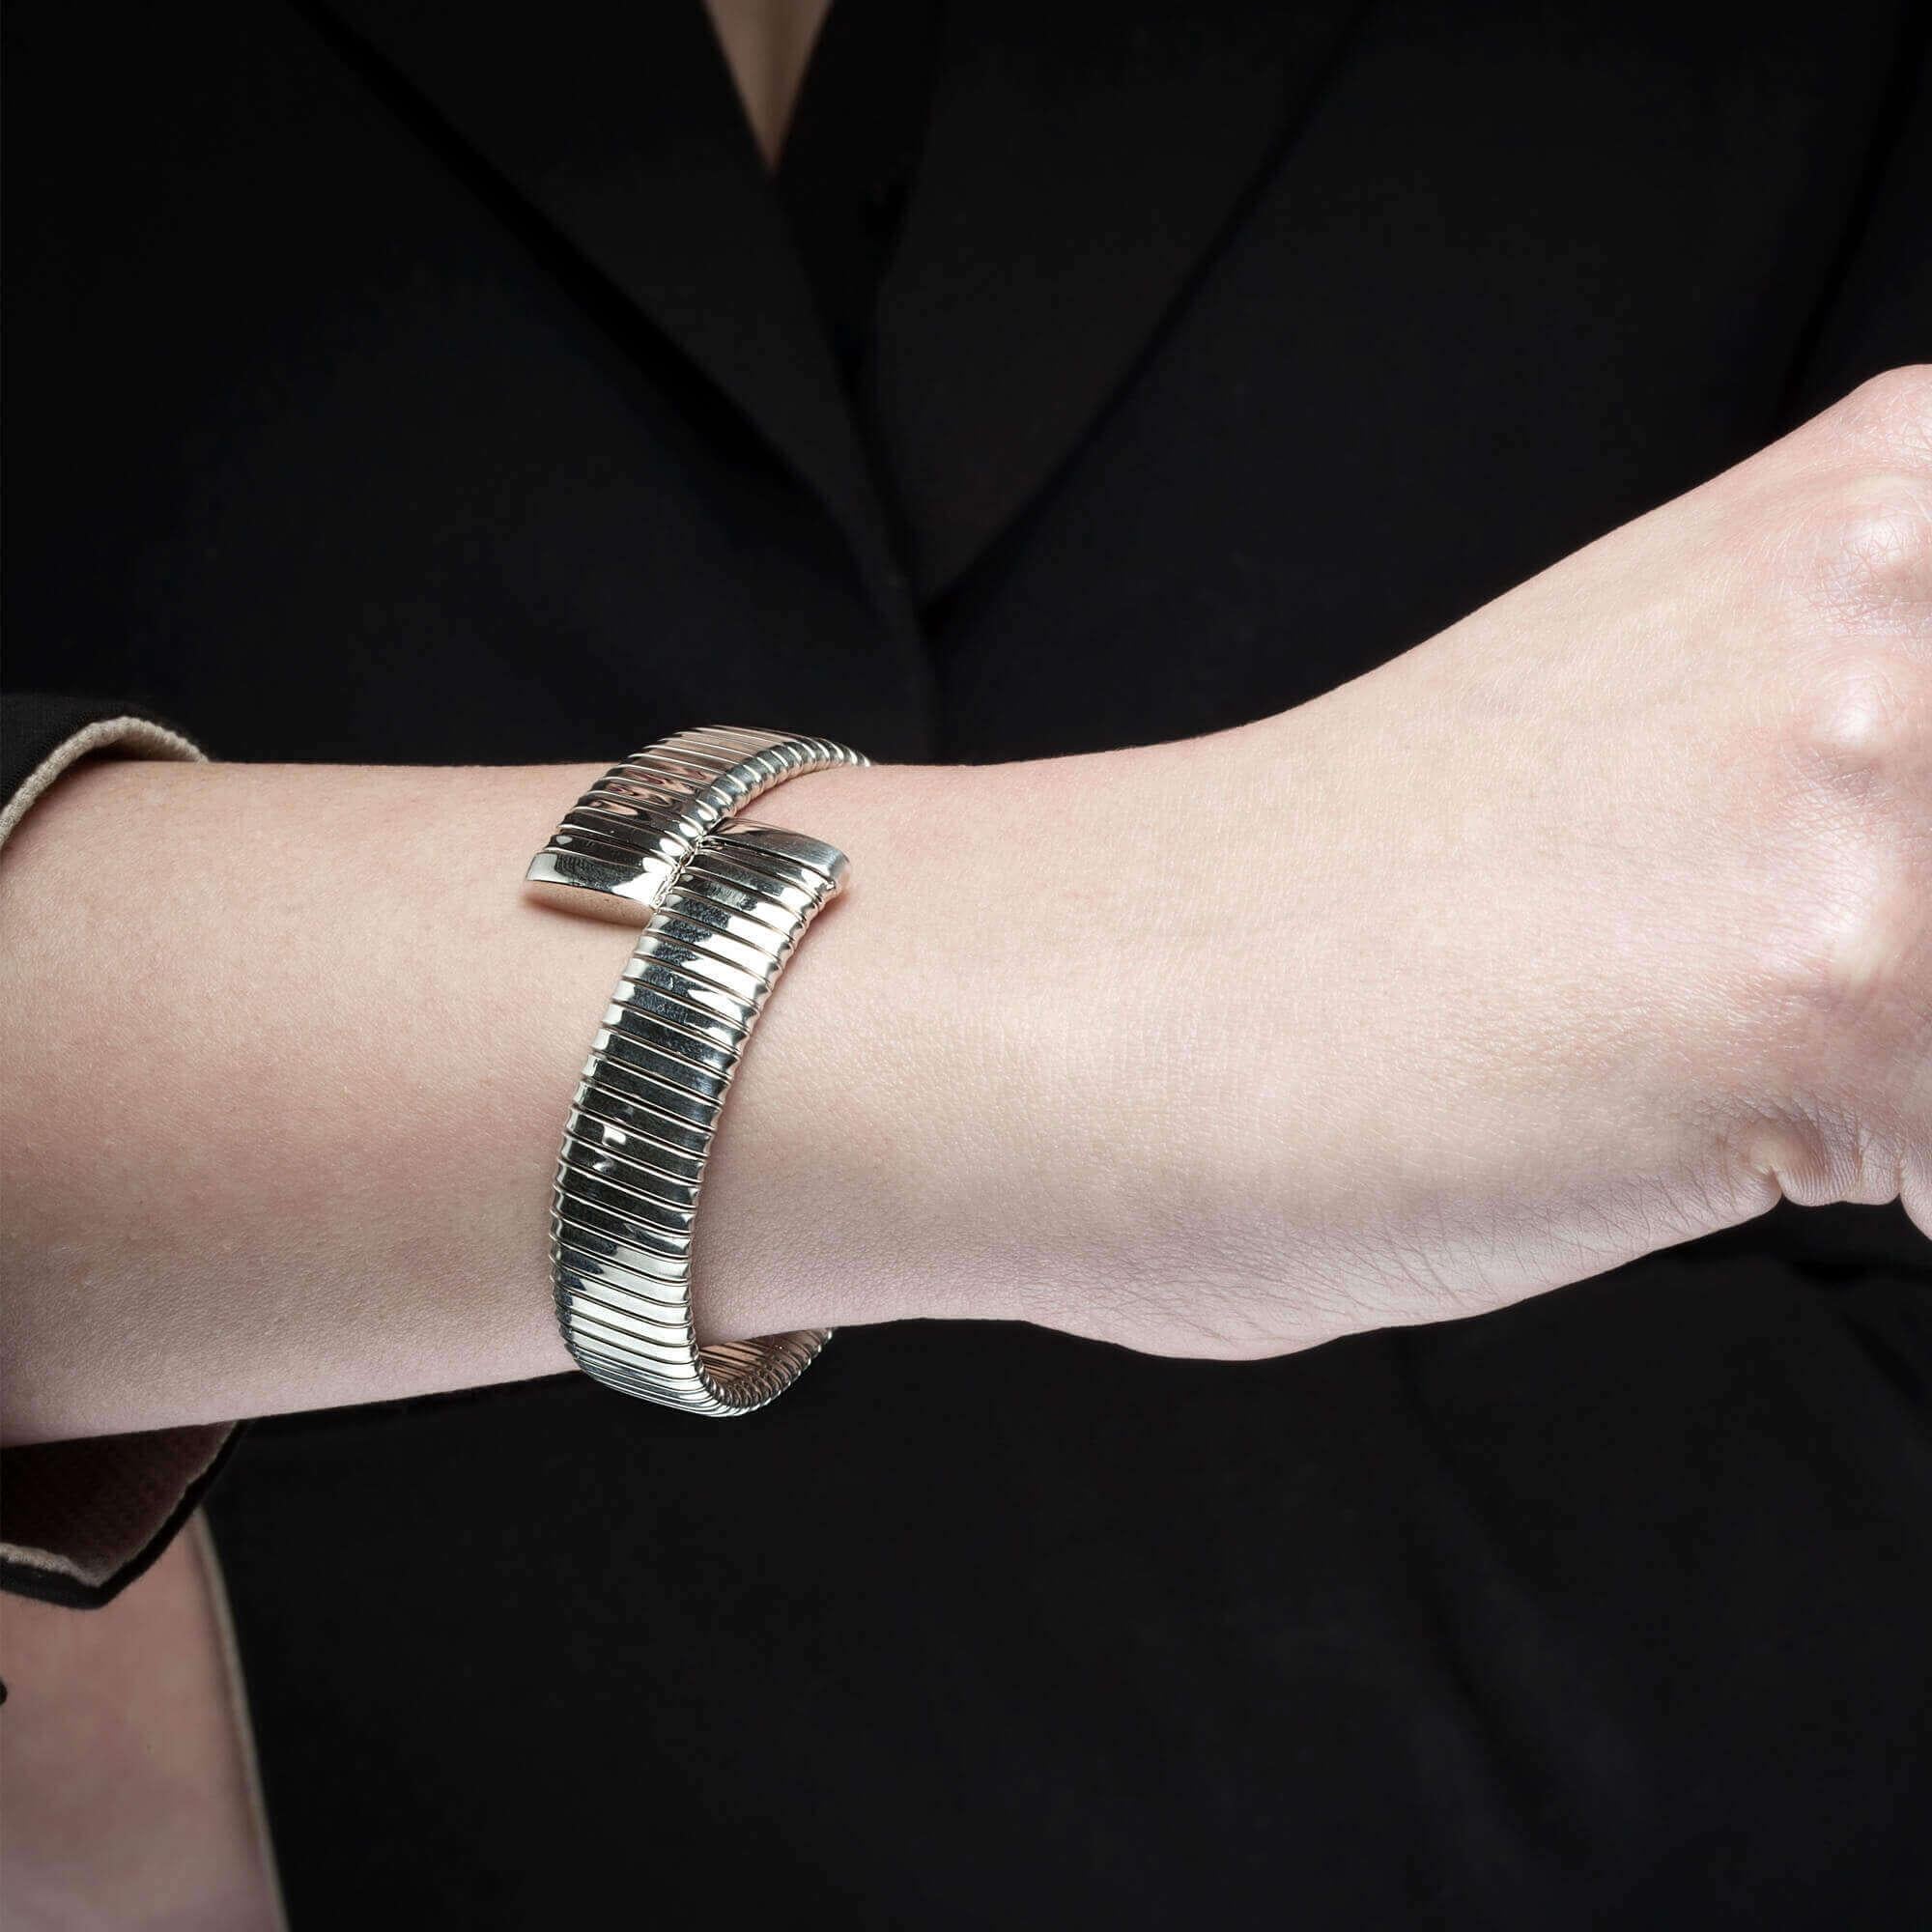 Tubogas contrariè bracelet, silver 925

Dimension mm: 13.5 width, 4 thickness